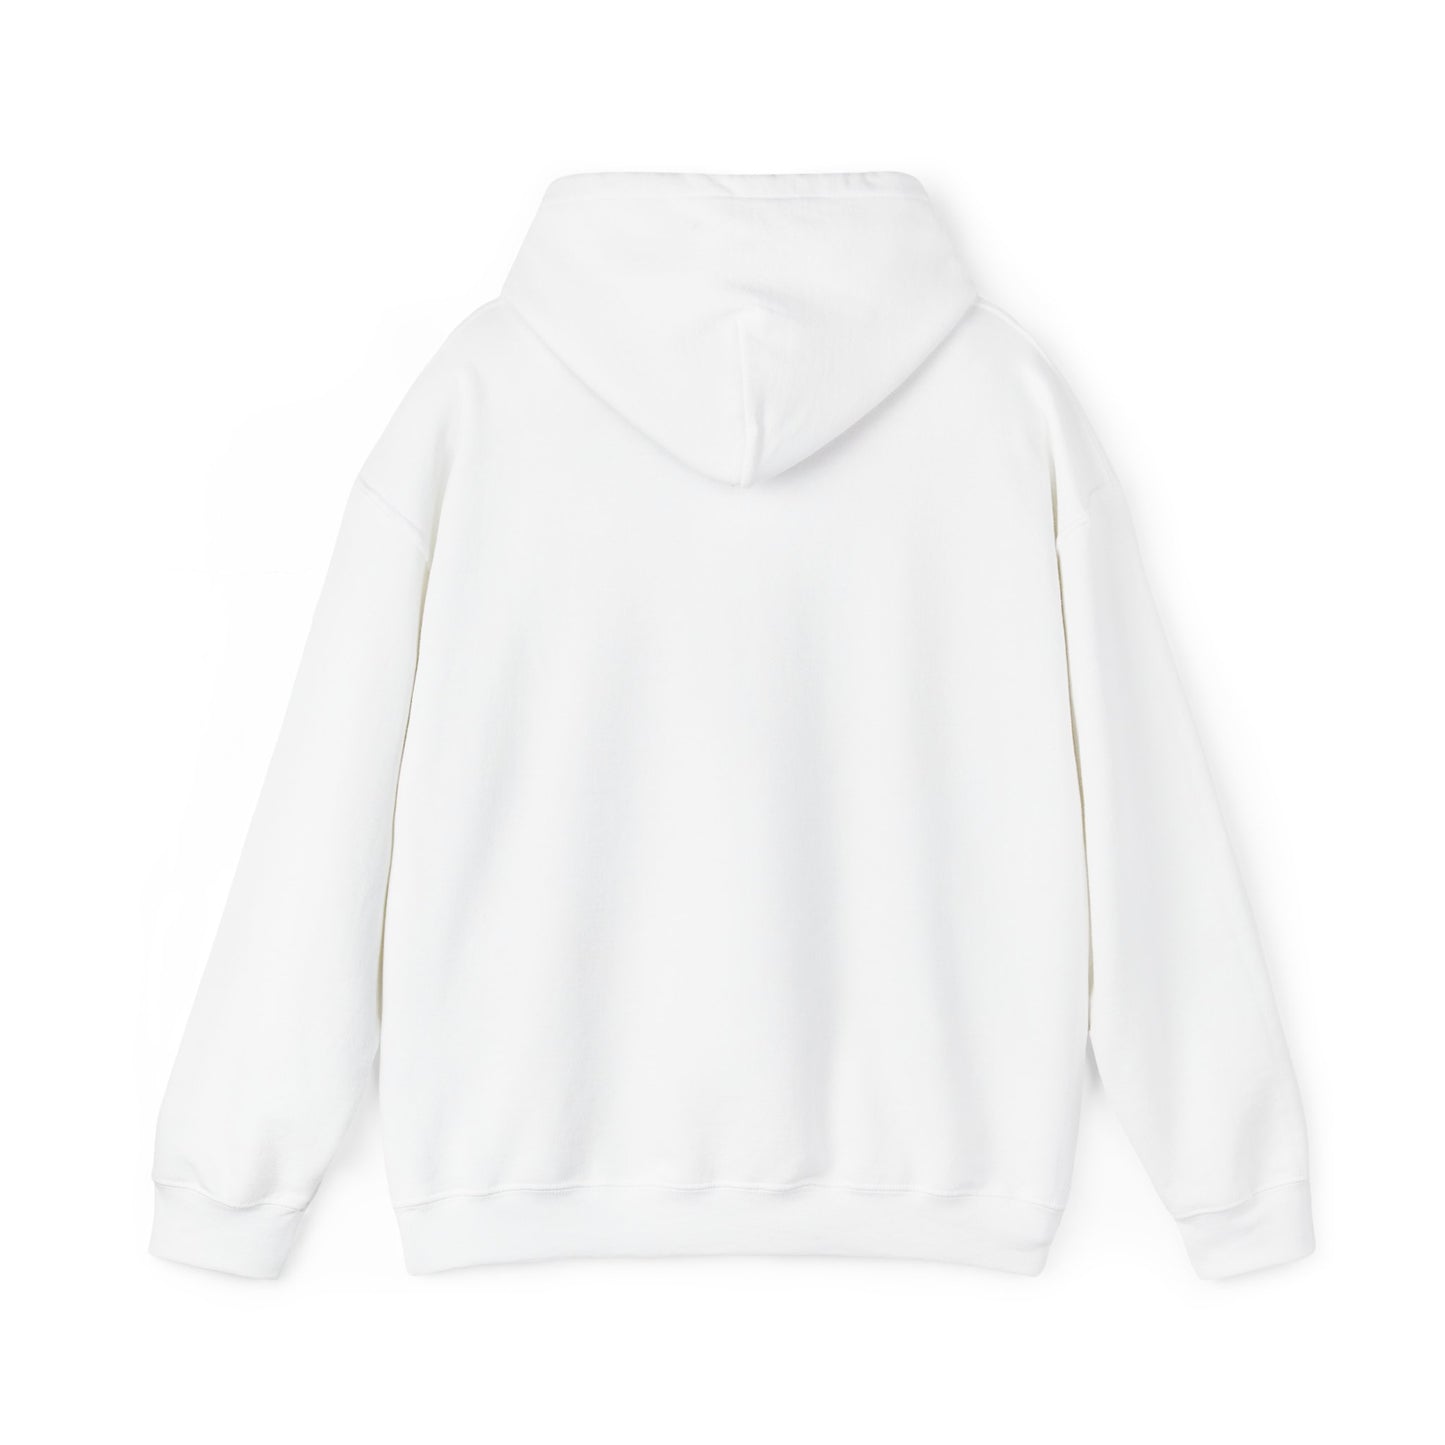 Dagoon Central "Classics White" Hooded Sweatshirt